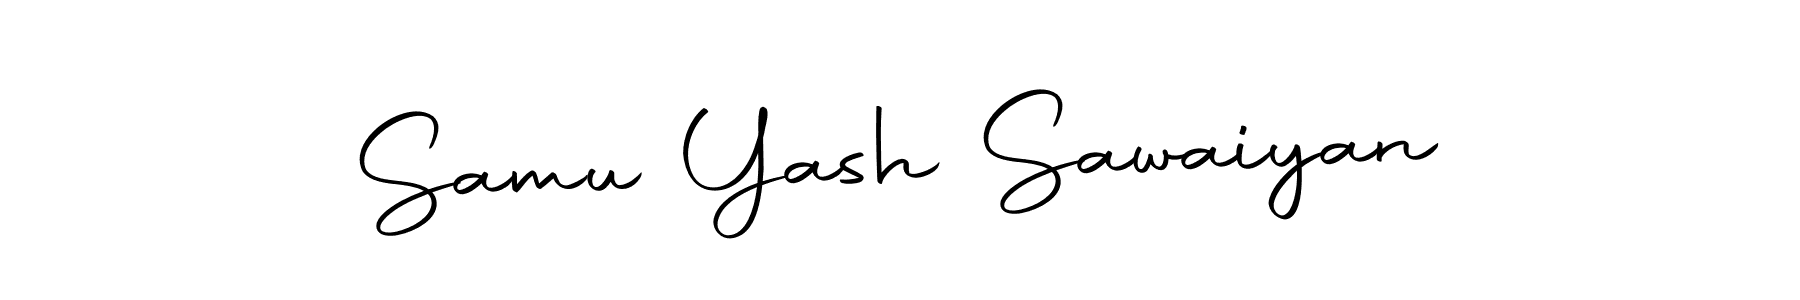 Make a beautiful signature design for name Samu Yash Sawaiyan. Use this online signature maker to create a handwritten signature for free. Samu Yash Sawaiyan signature style 10 images and pictures png